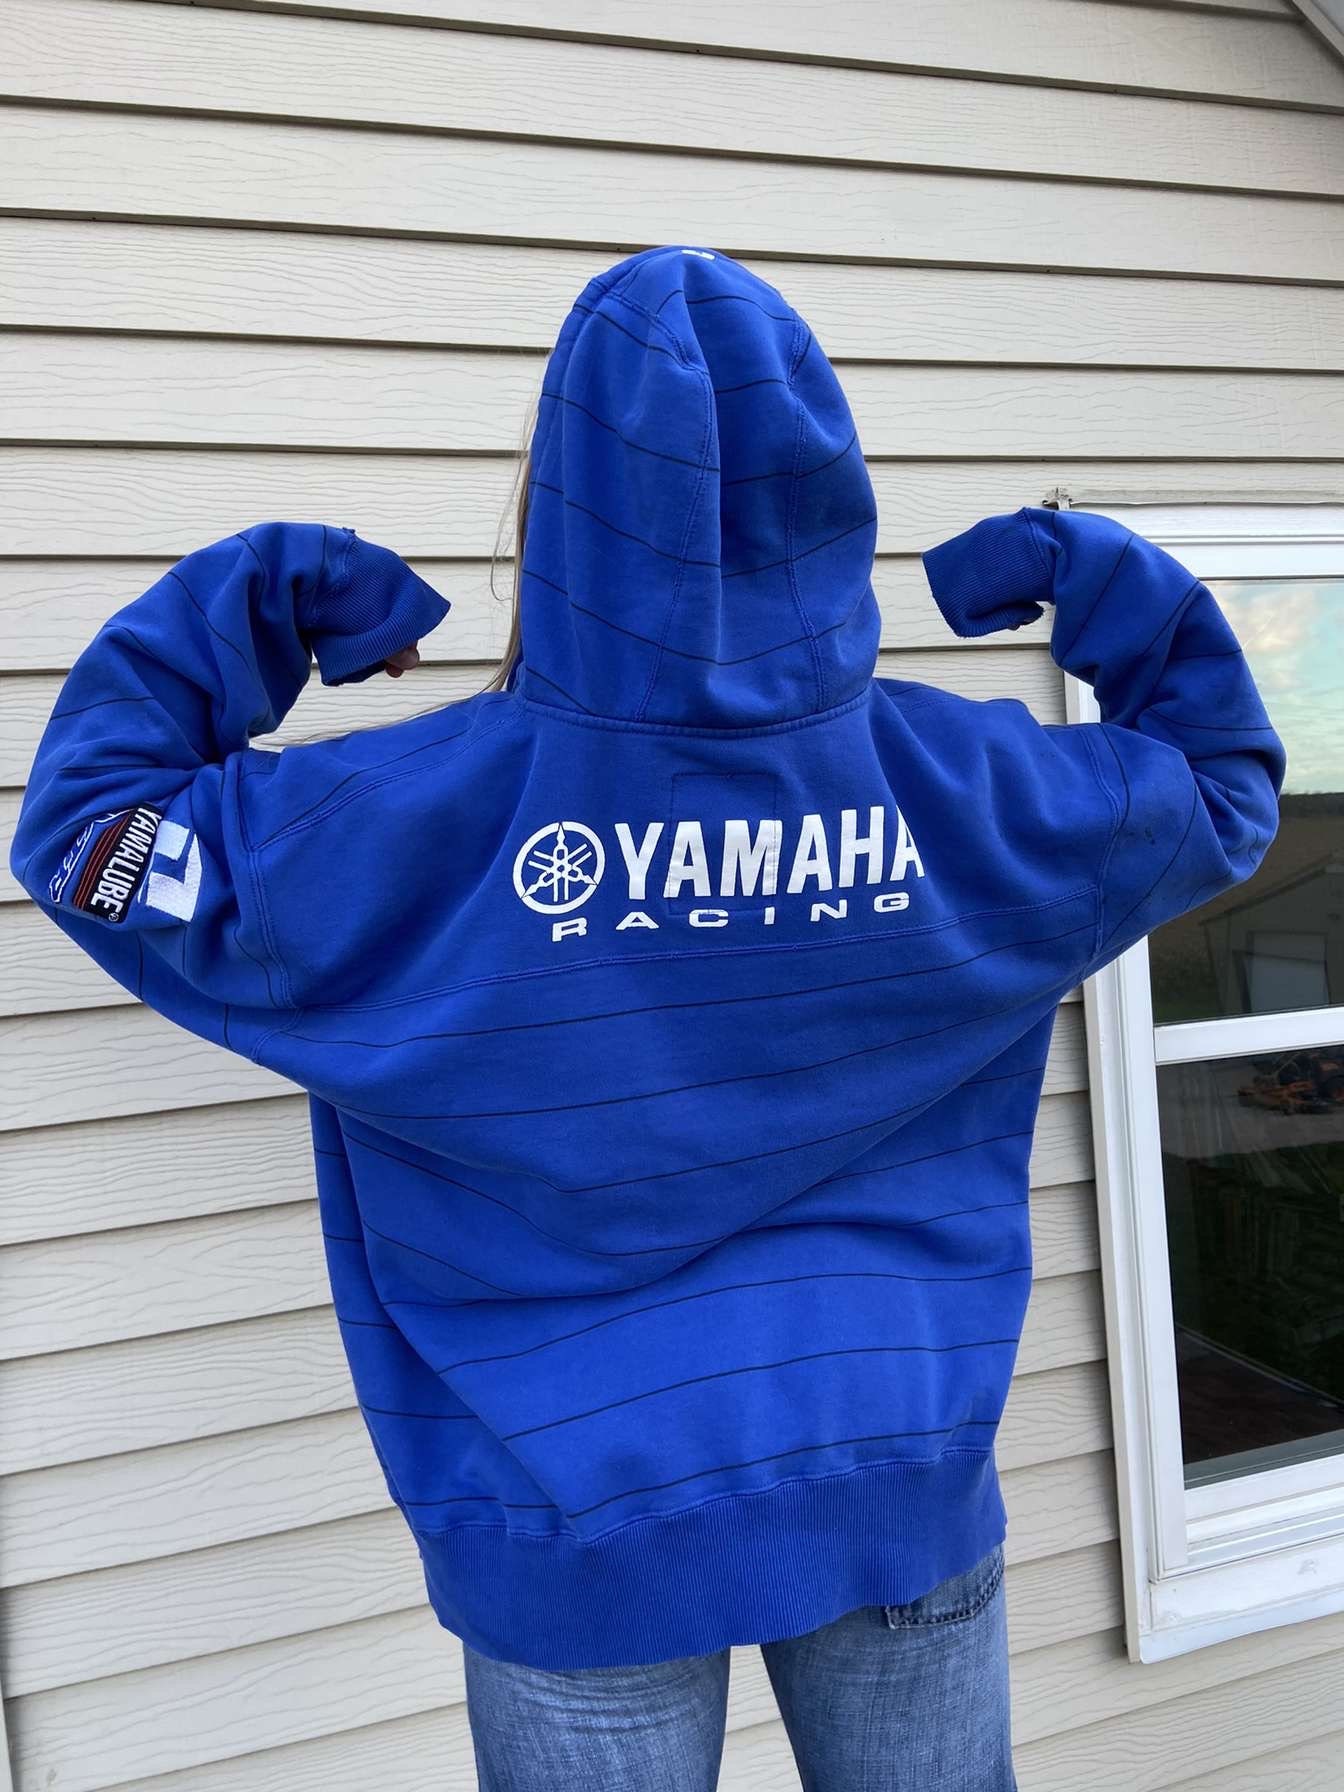 Shop Yamaha Men's Apparel - Shirts, Hoodies, Jackets